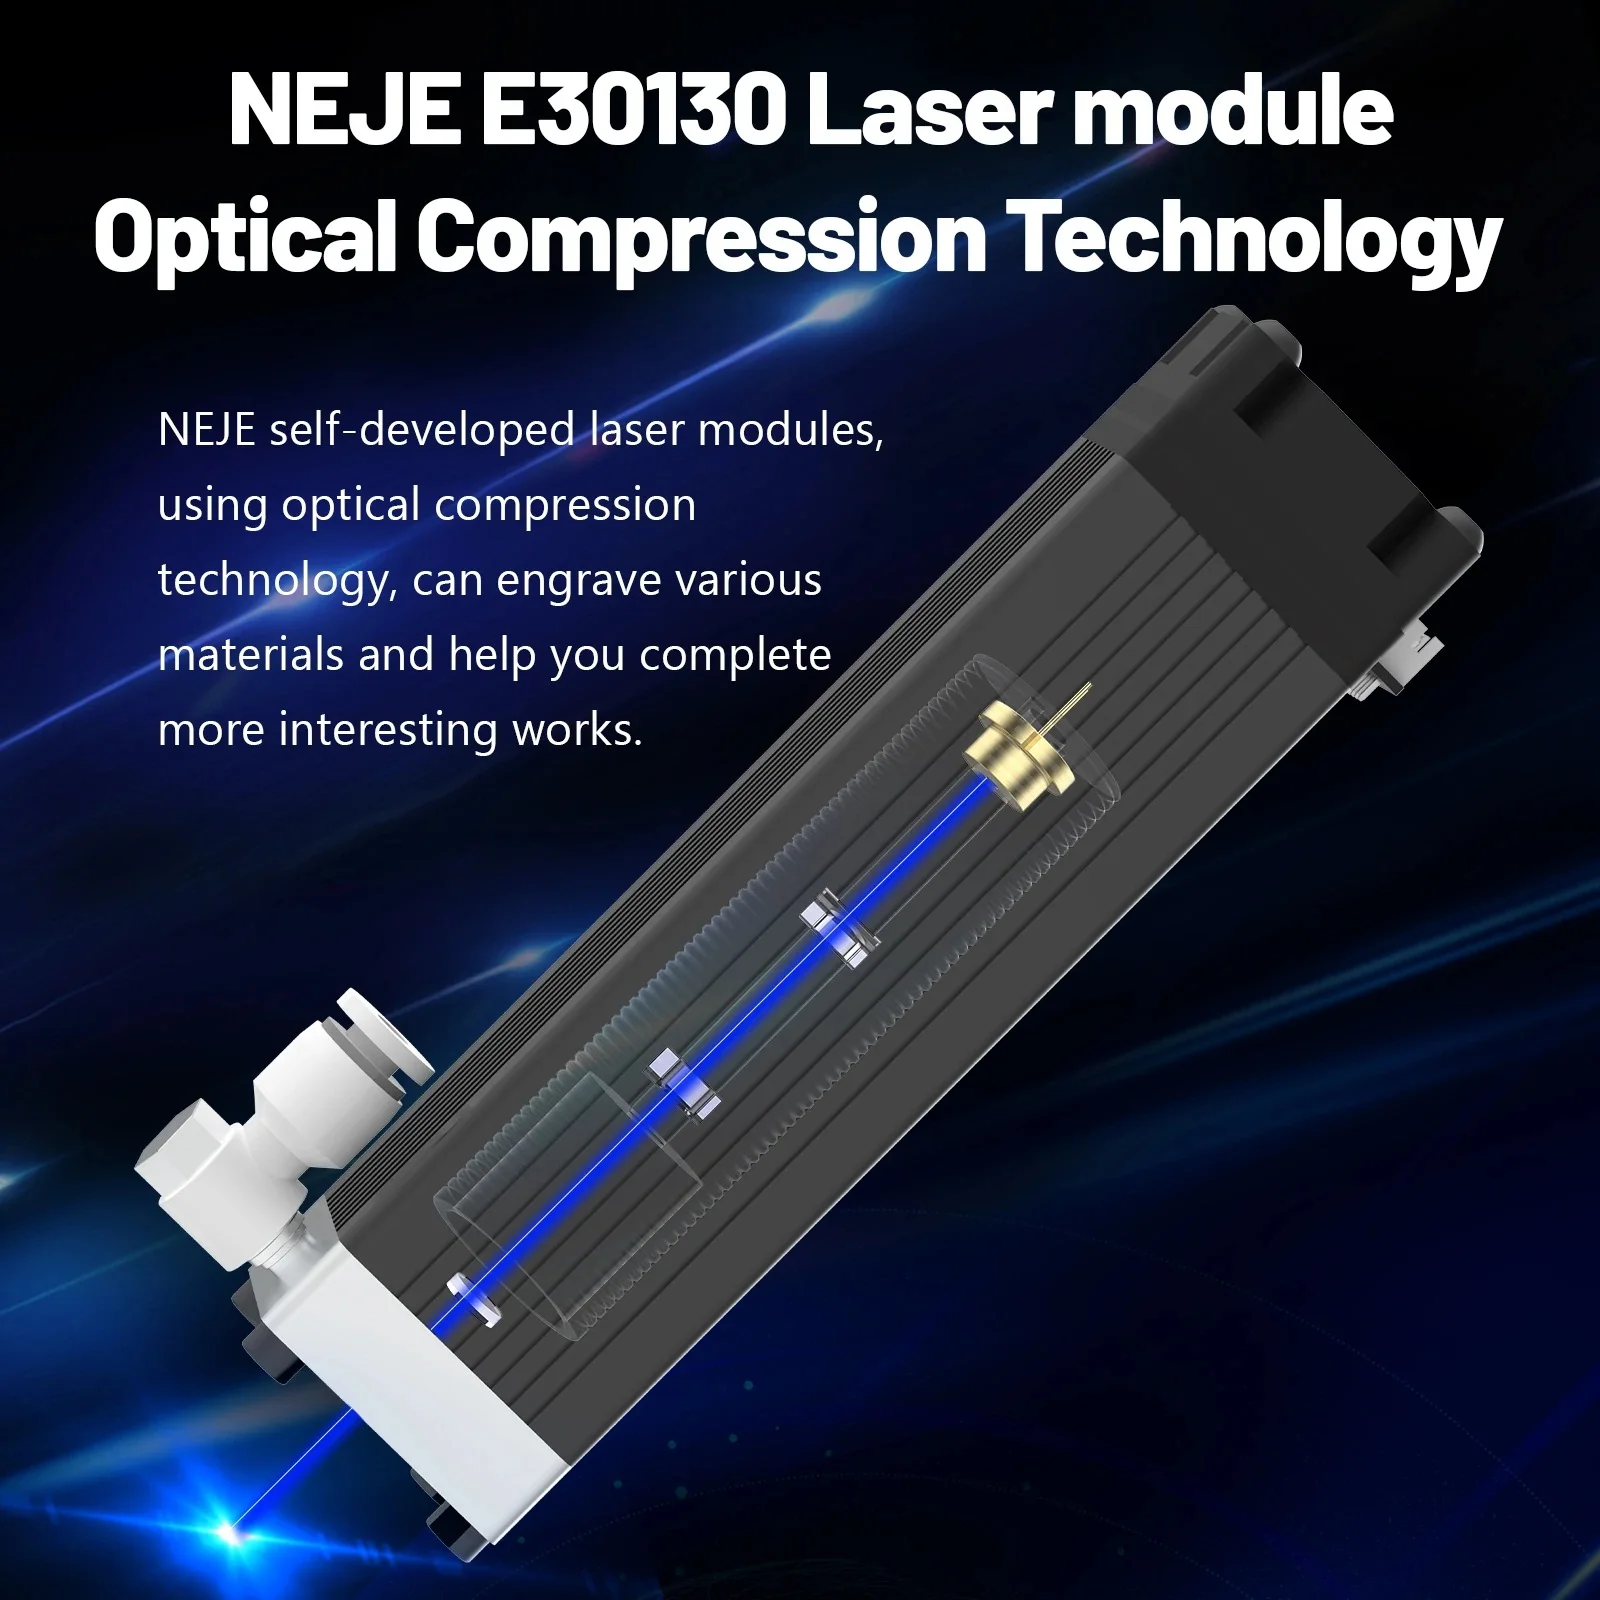 NEJE E30130 Laser Module Head for Laser Engraving Machine CNC Wood Cutting Printer Router DIY Wireless Logo Marking Tools enlarge